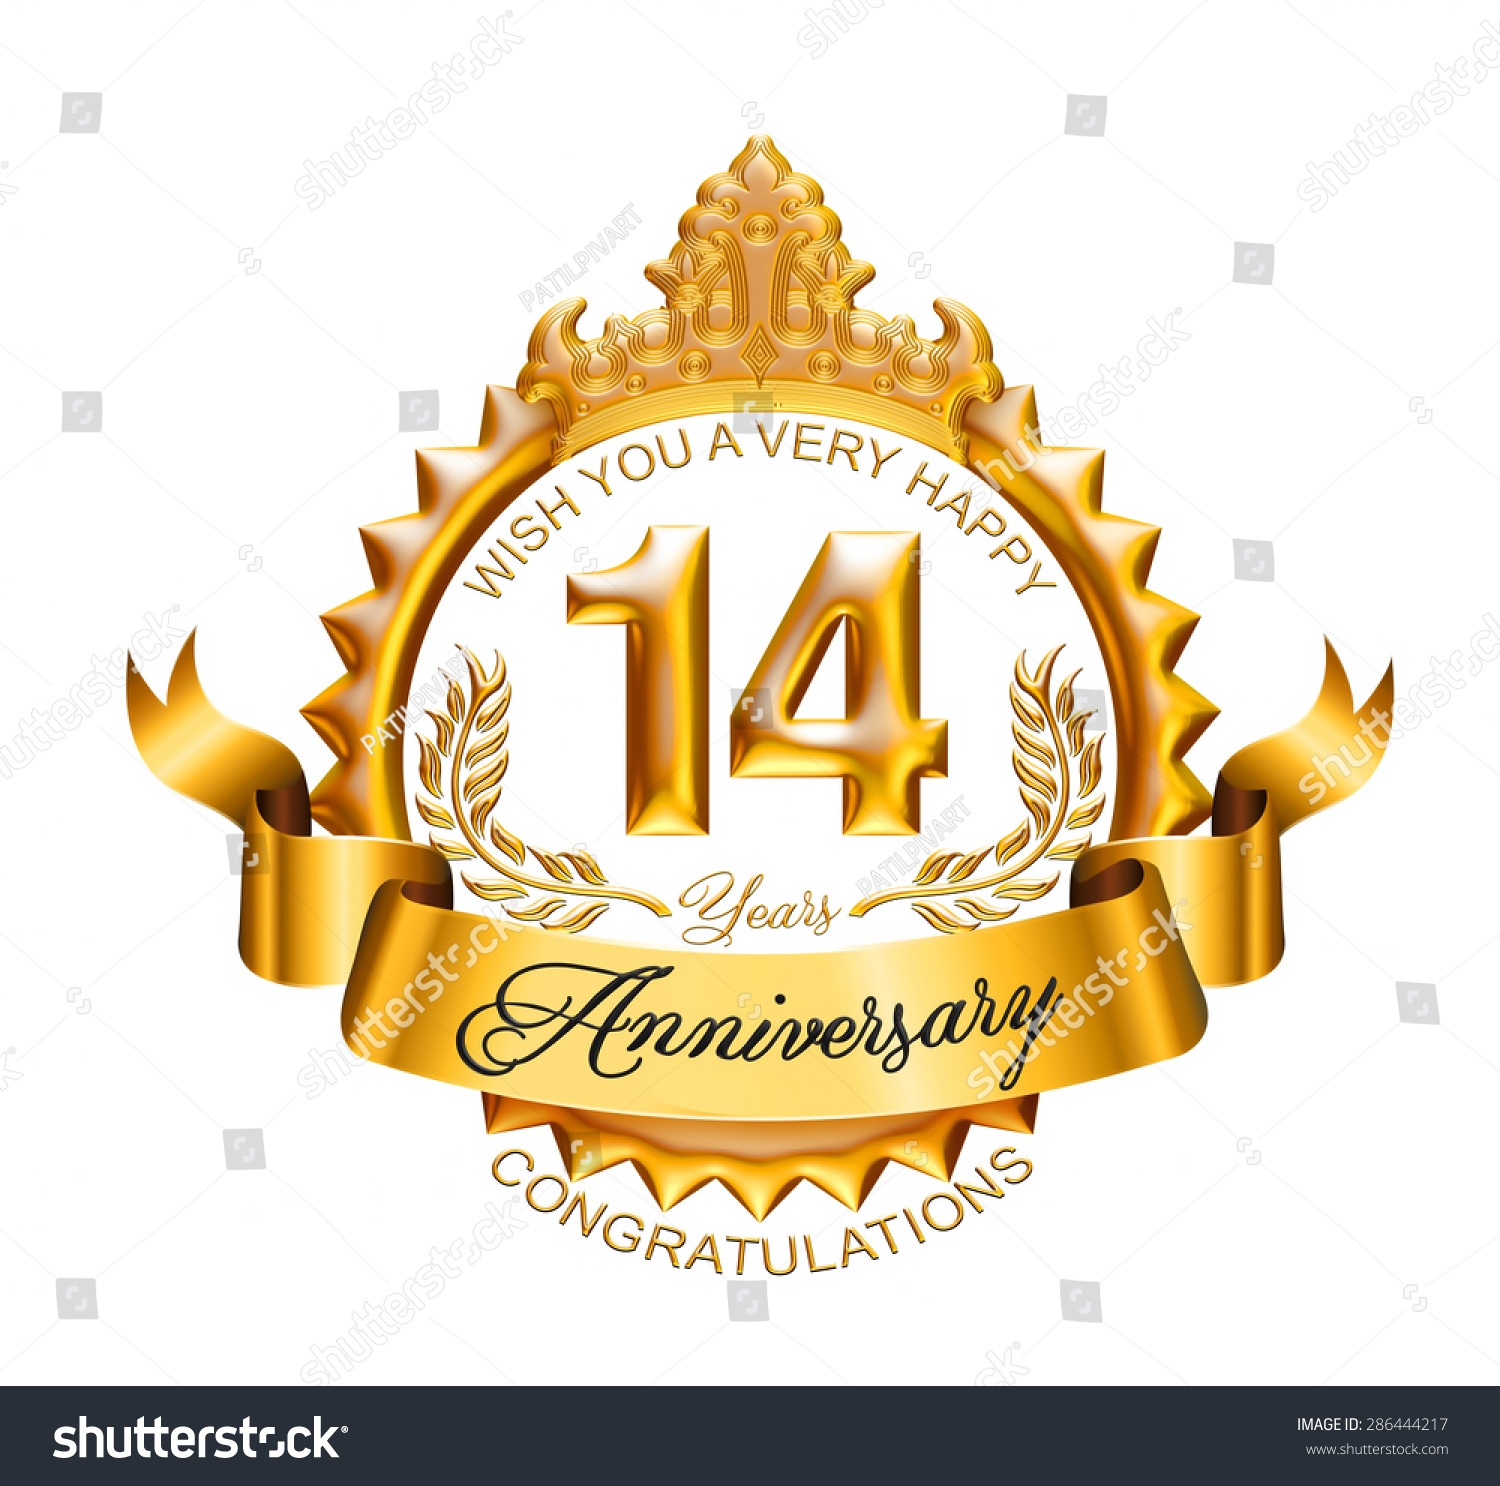 14 Years Anniversary Golden Laurel Wreath Stock Illustration 286444217